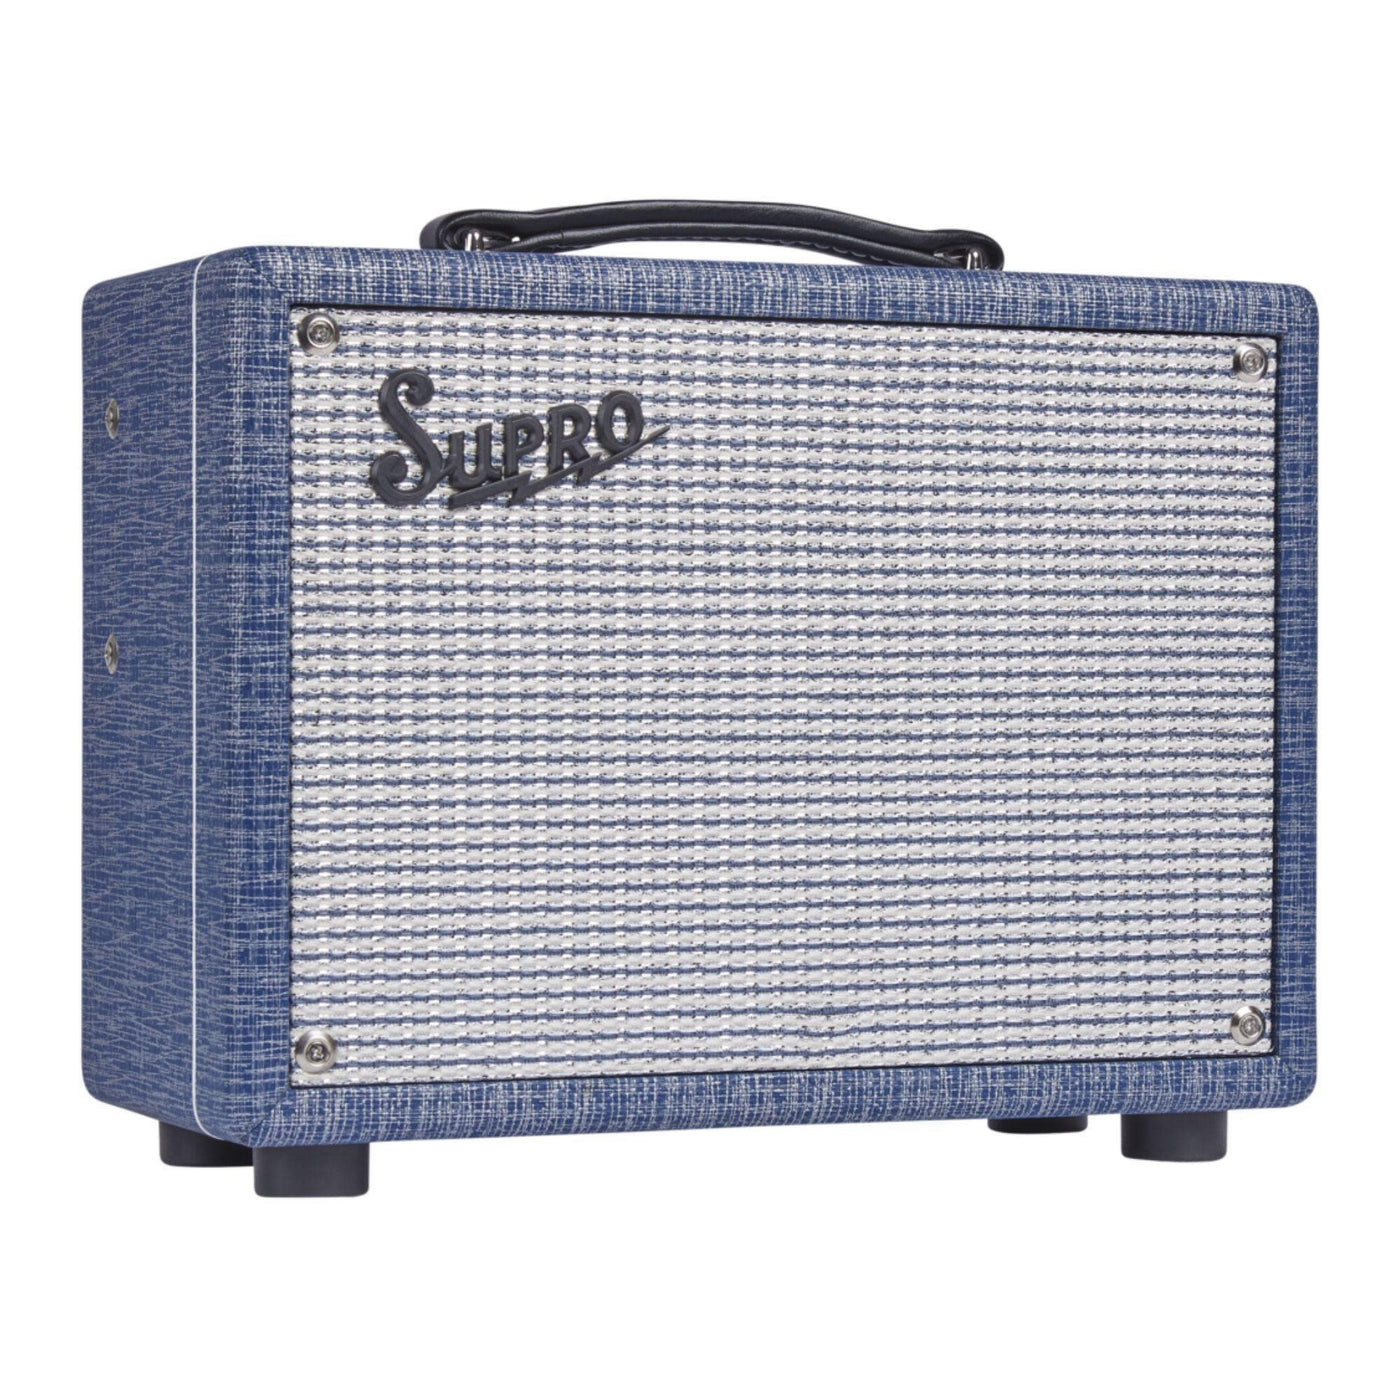 Supro 1606J ’64 Super Tube Guitar Combo Amplifier